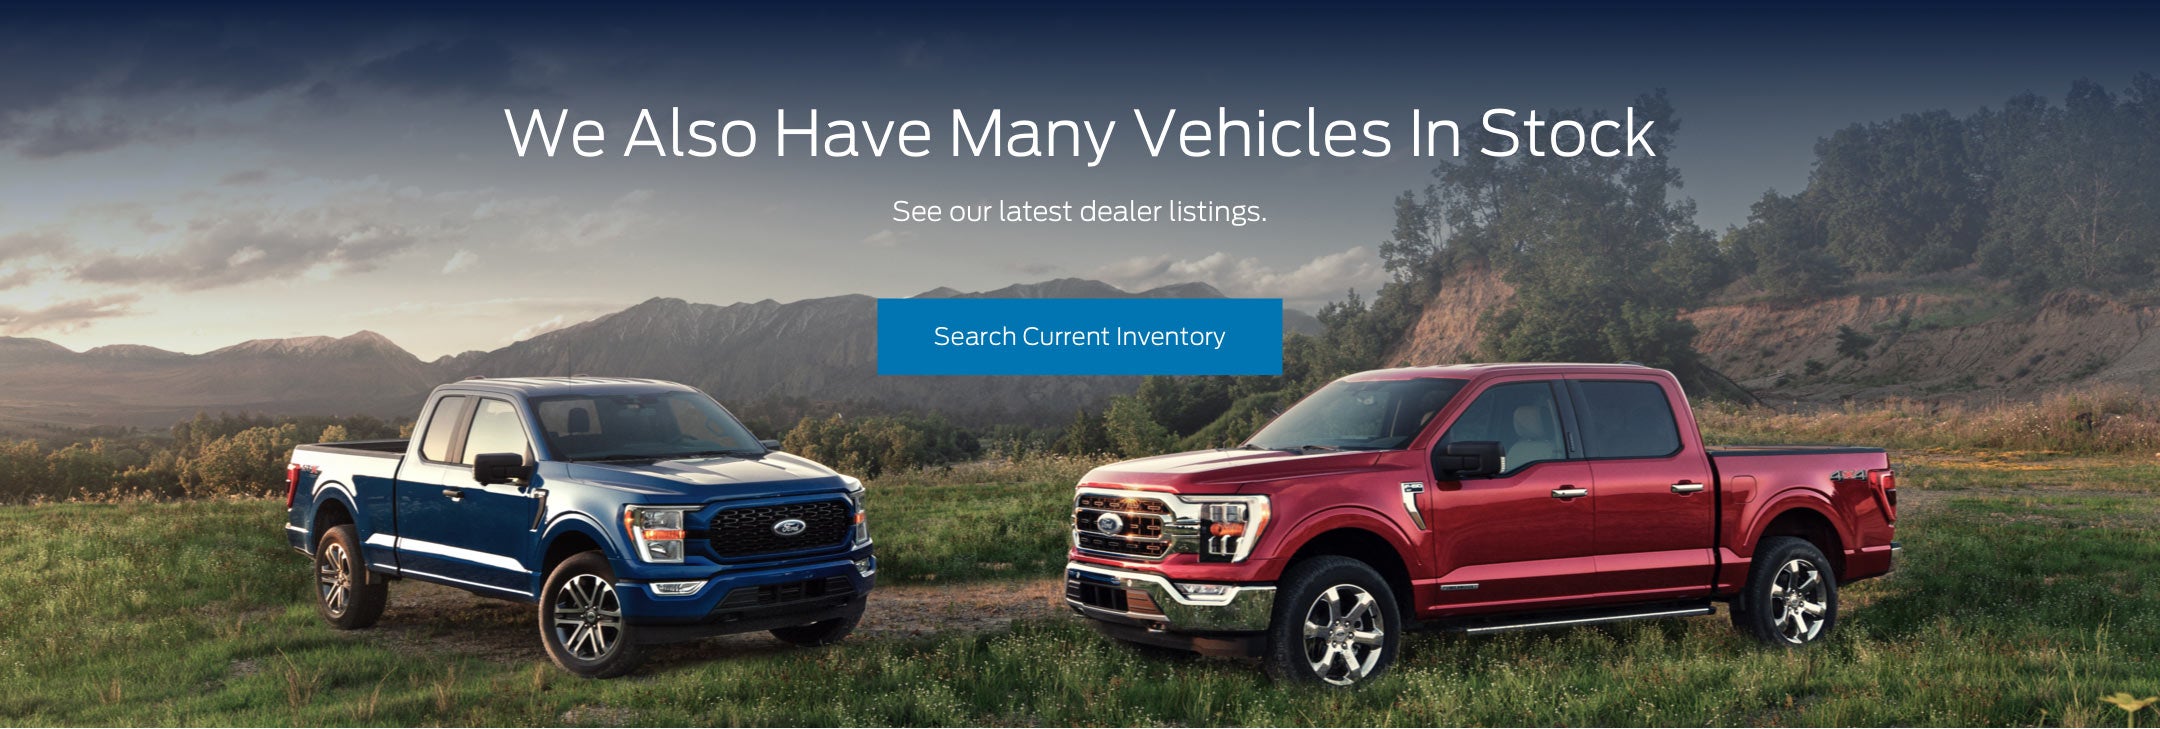 Ford vehicles in stock | Ewald's Venus Ford, LLC in Cudahy WI